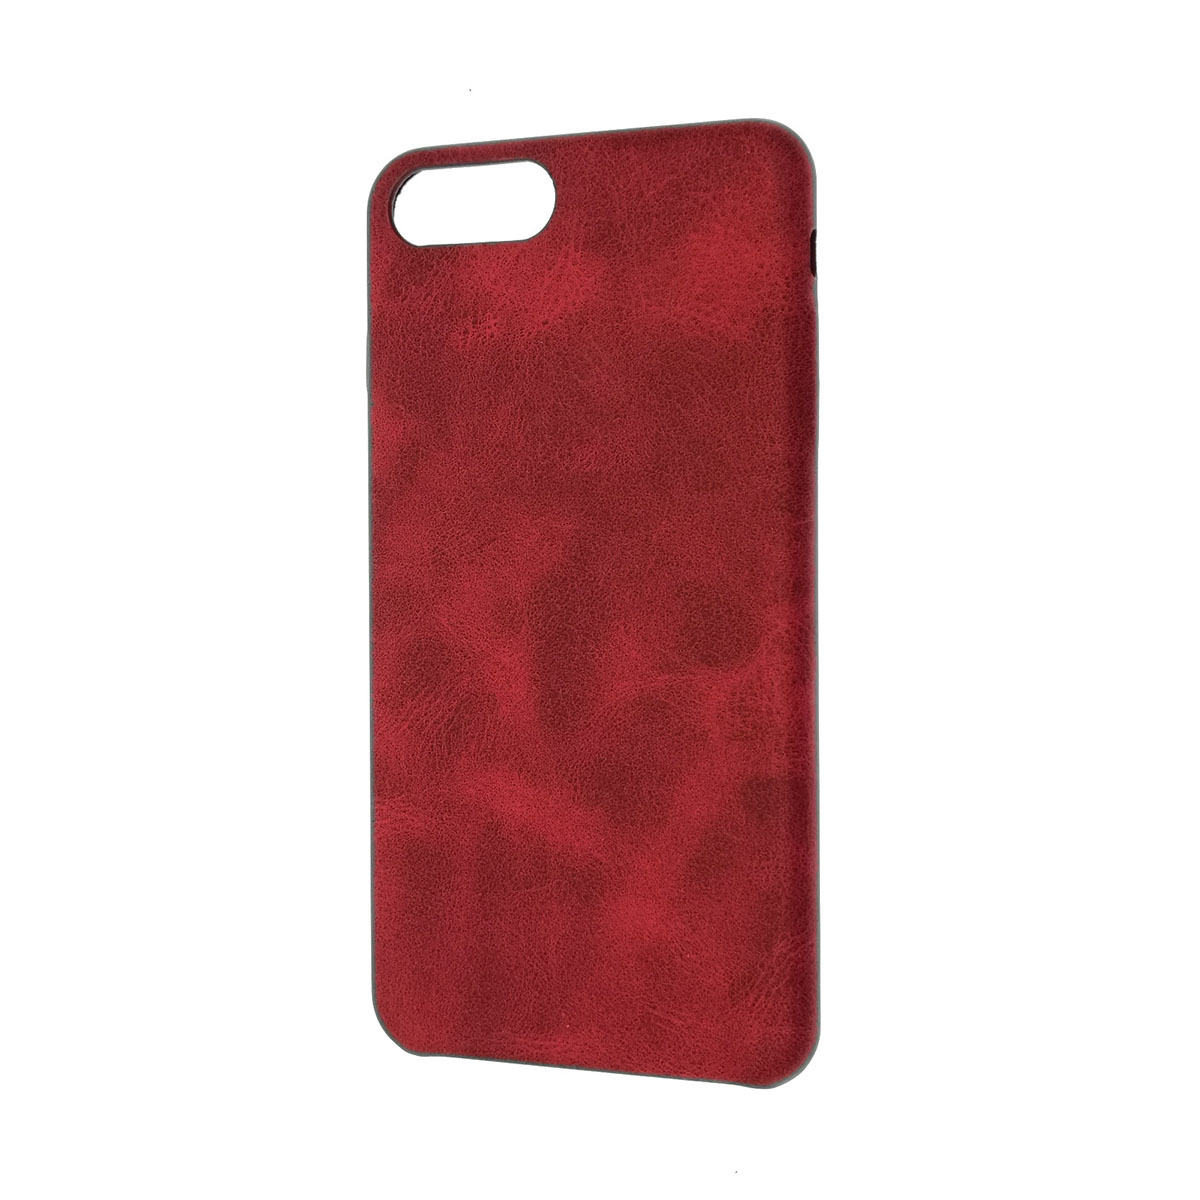 Чехол накладка для APPLE iPhone 7 Plus, 8 Plus, экокожа, пластик, цвет красный.